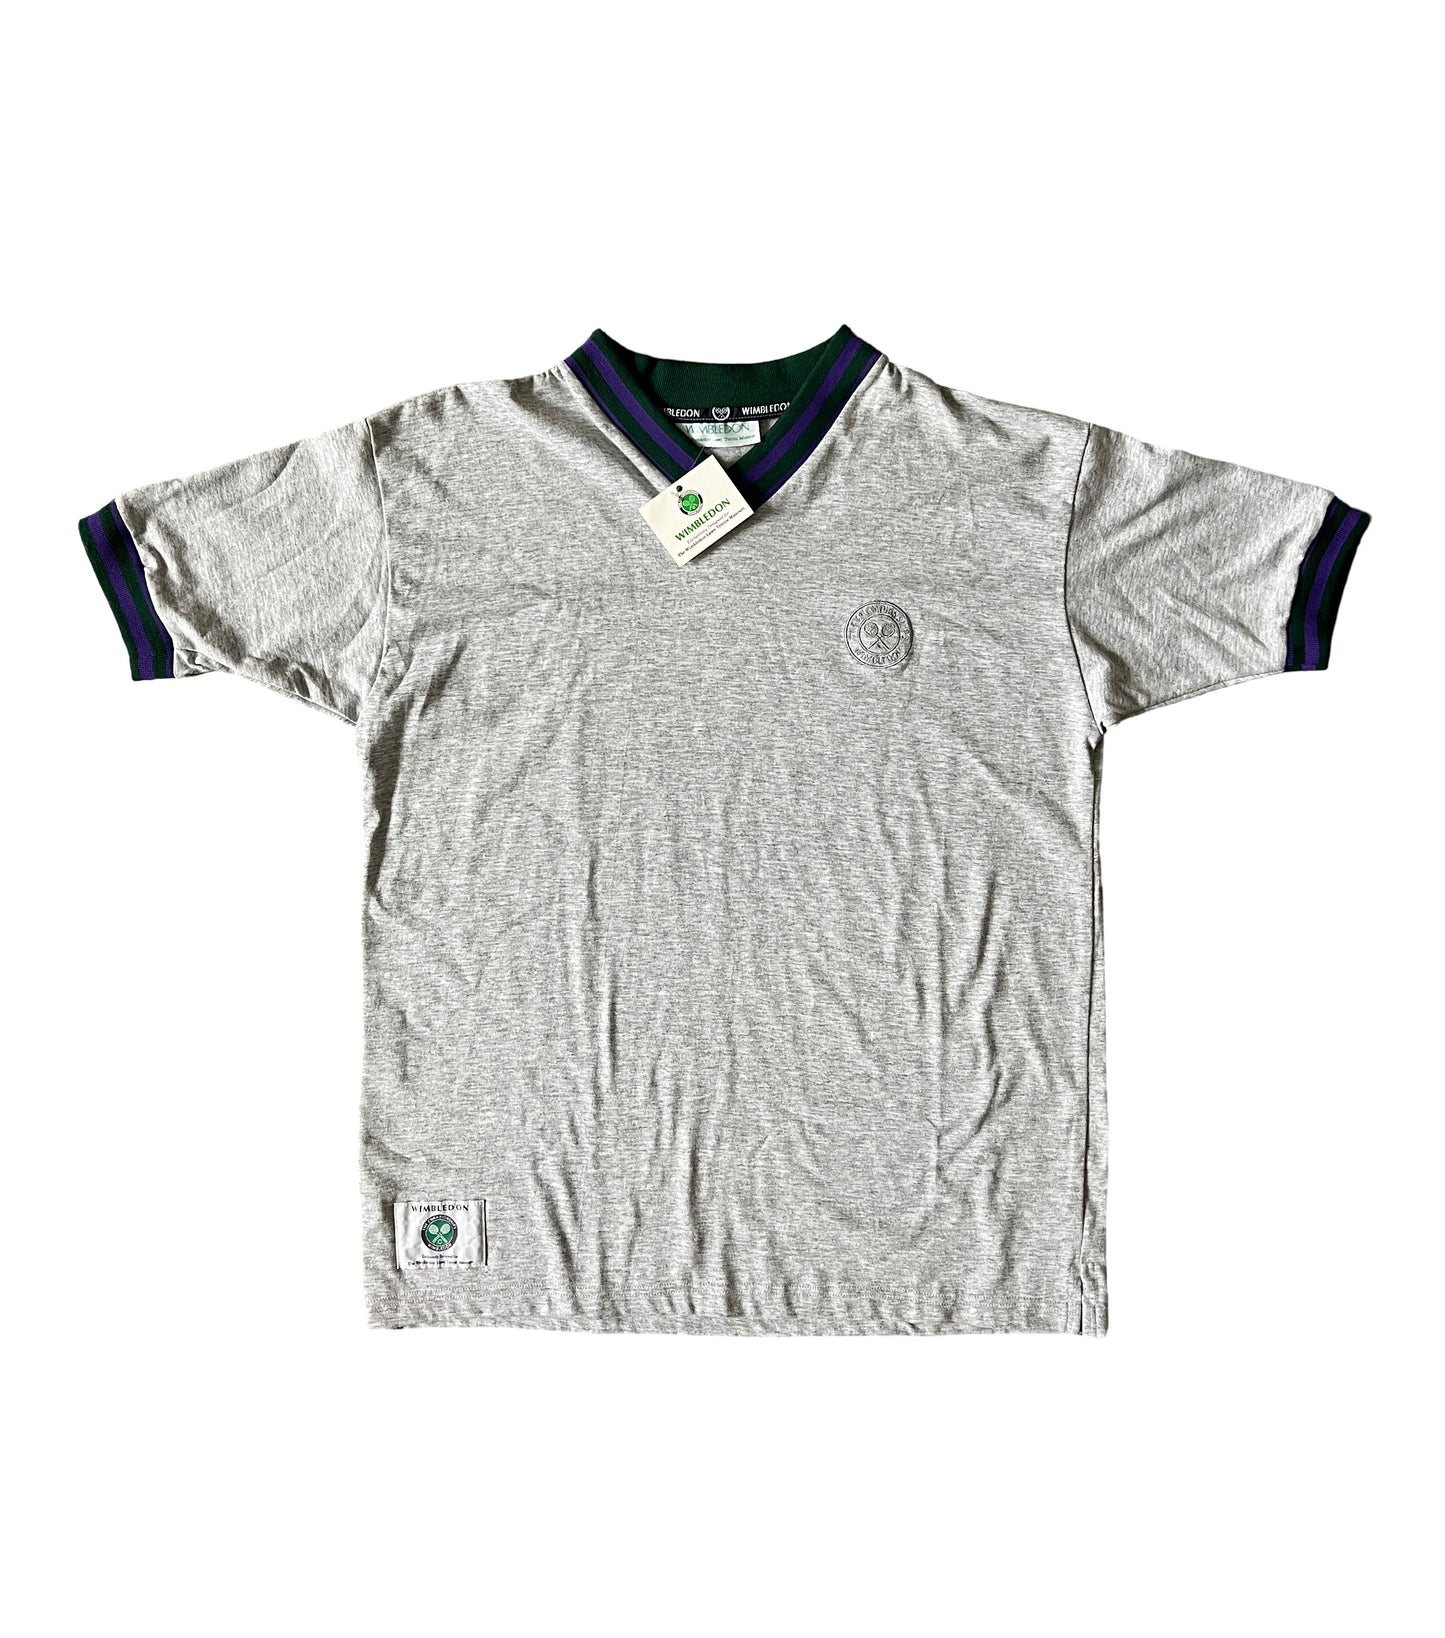 Vintage Wimbledon V-Neck T-Shirt (circa 1990s)